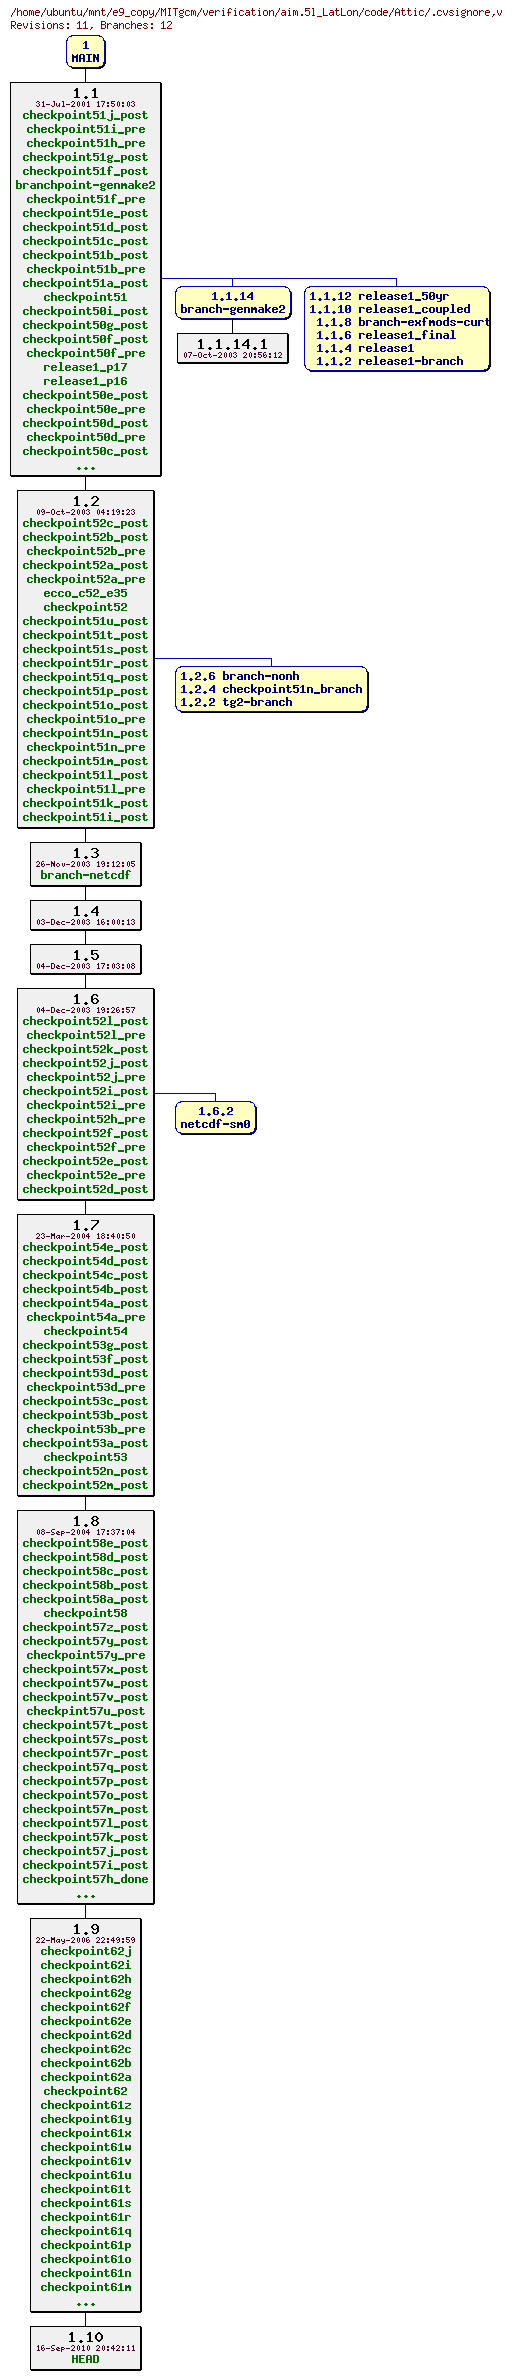 Revisions of MITgcm/verification/aim.5l_LatLon/code/.cvsignore